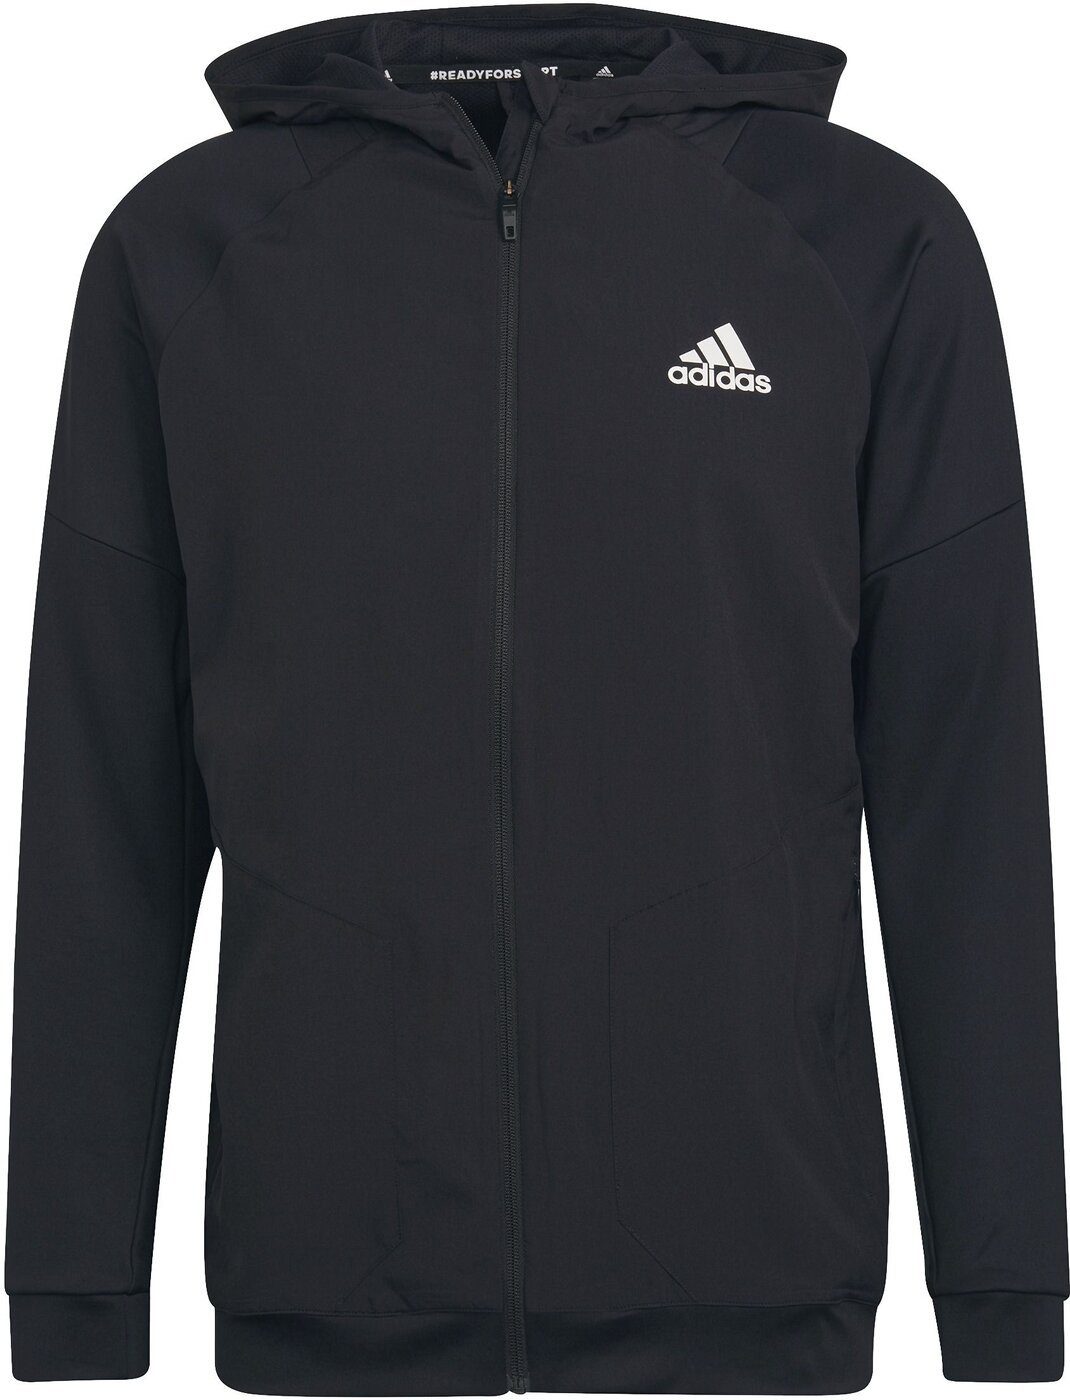 Adidas Herren Sportswear adidas M Jacke Performance Funktionsshirt TRAIN adidas FZ Black